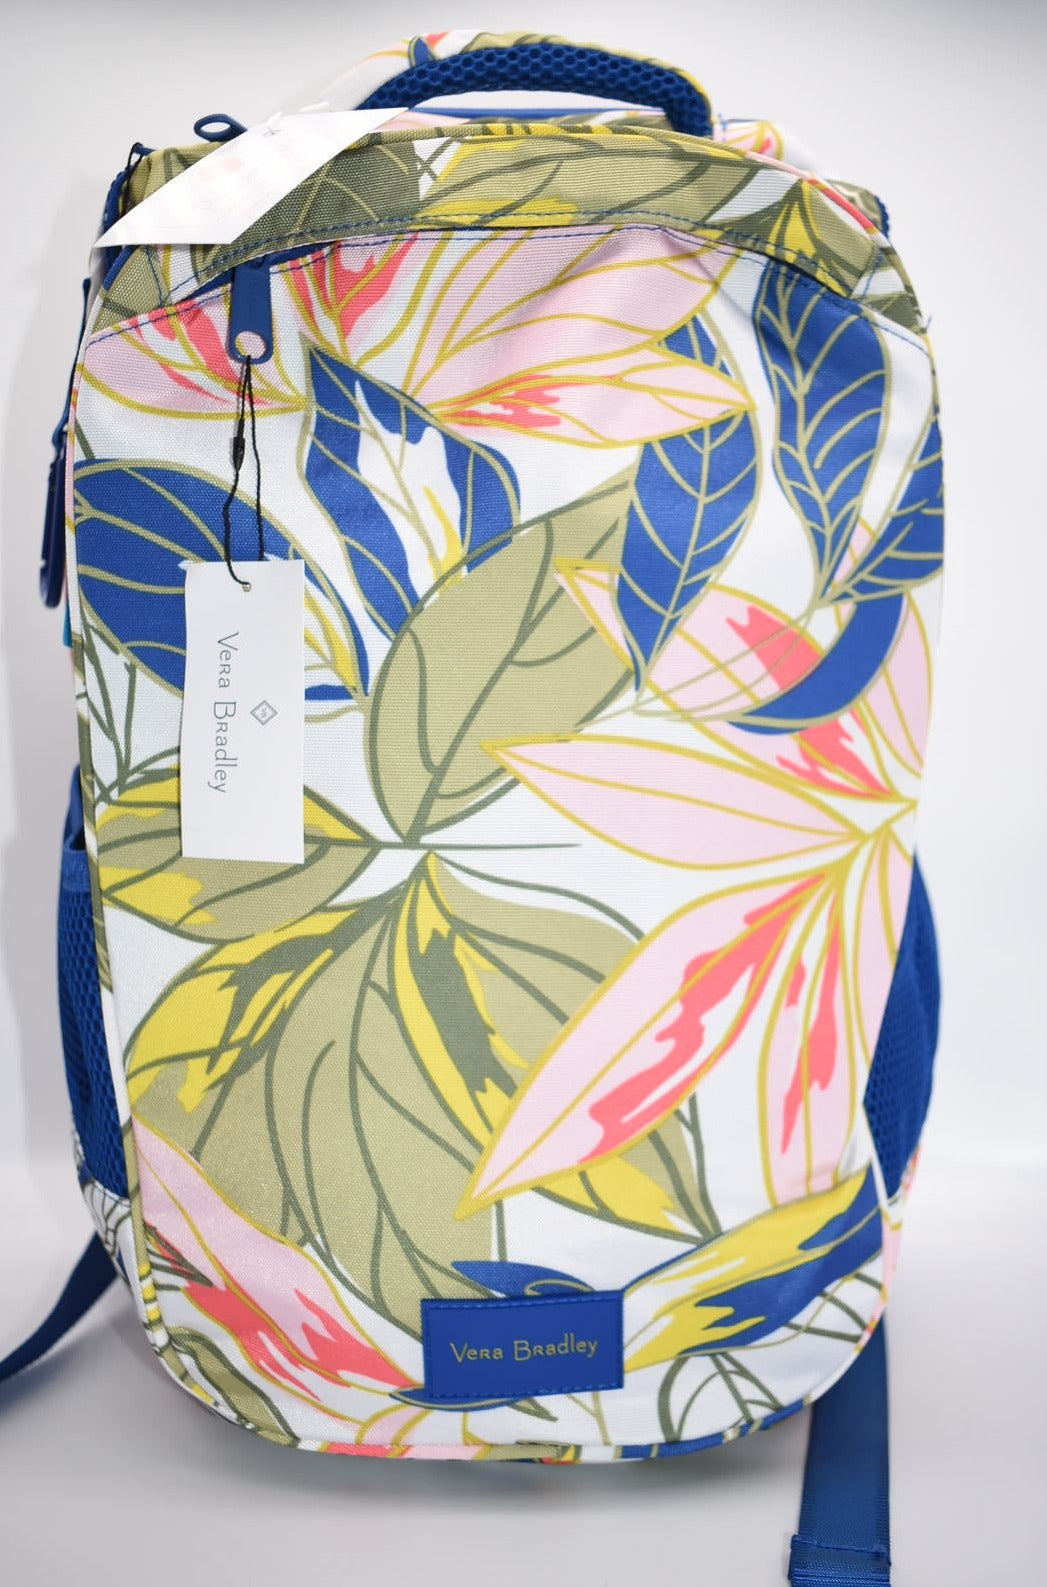 Vera Bradley Reactive Grand Backpack in "Rain Forest Leaves" Pattern